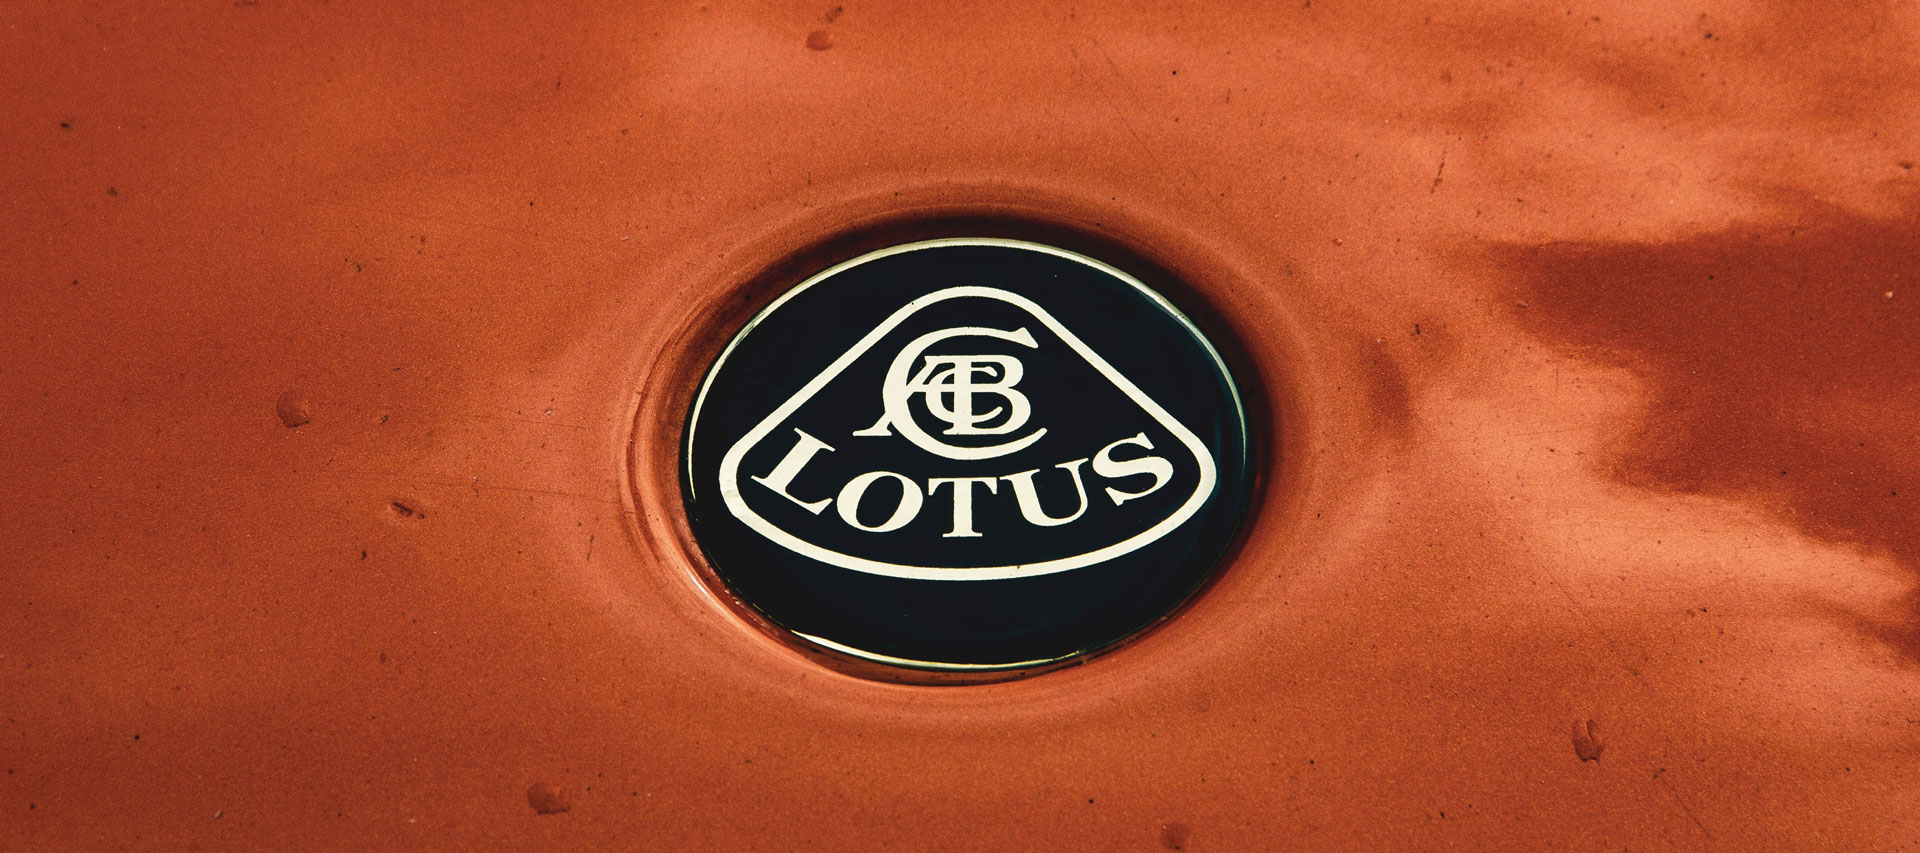 Lotus Evija Car Insurance Header Image